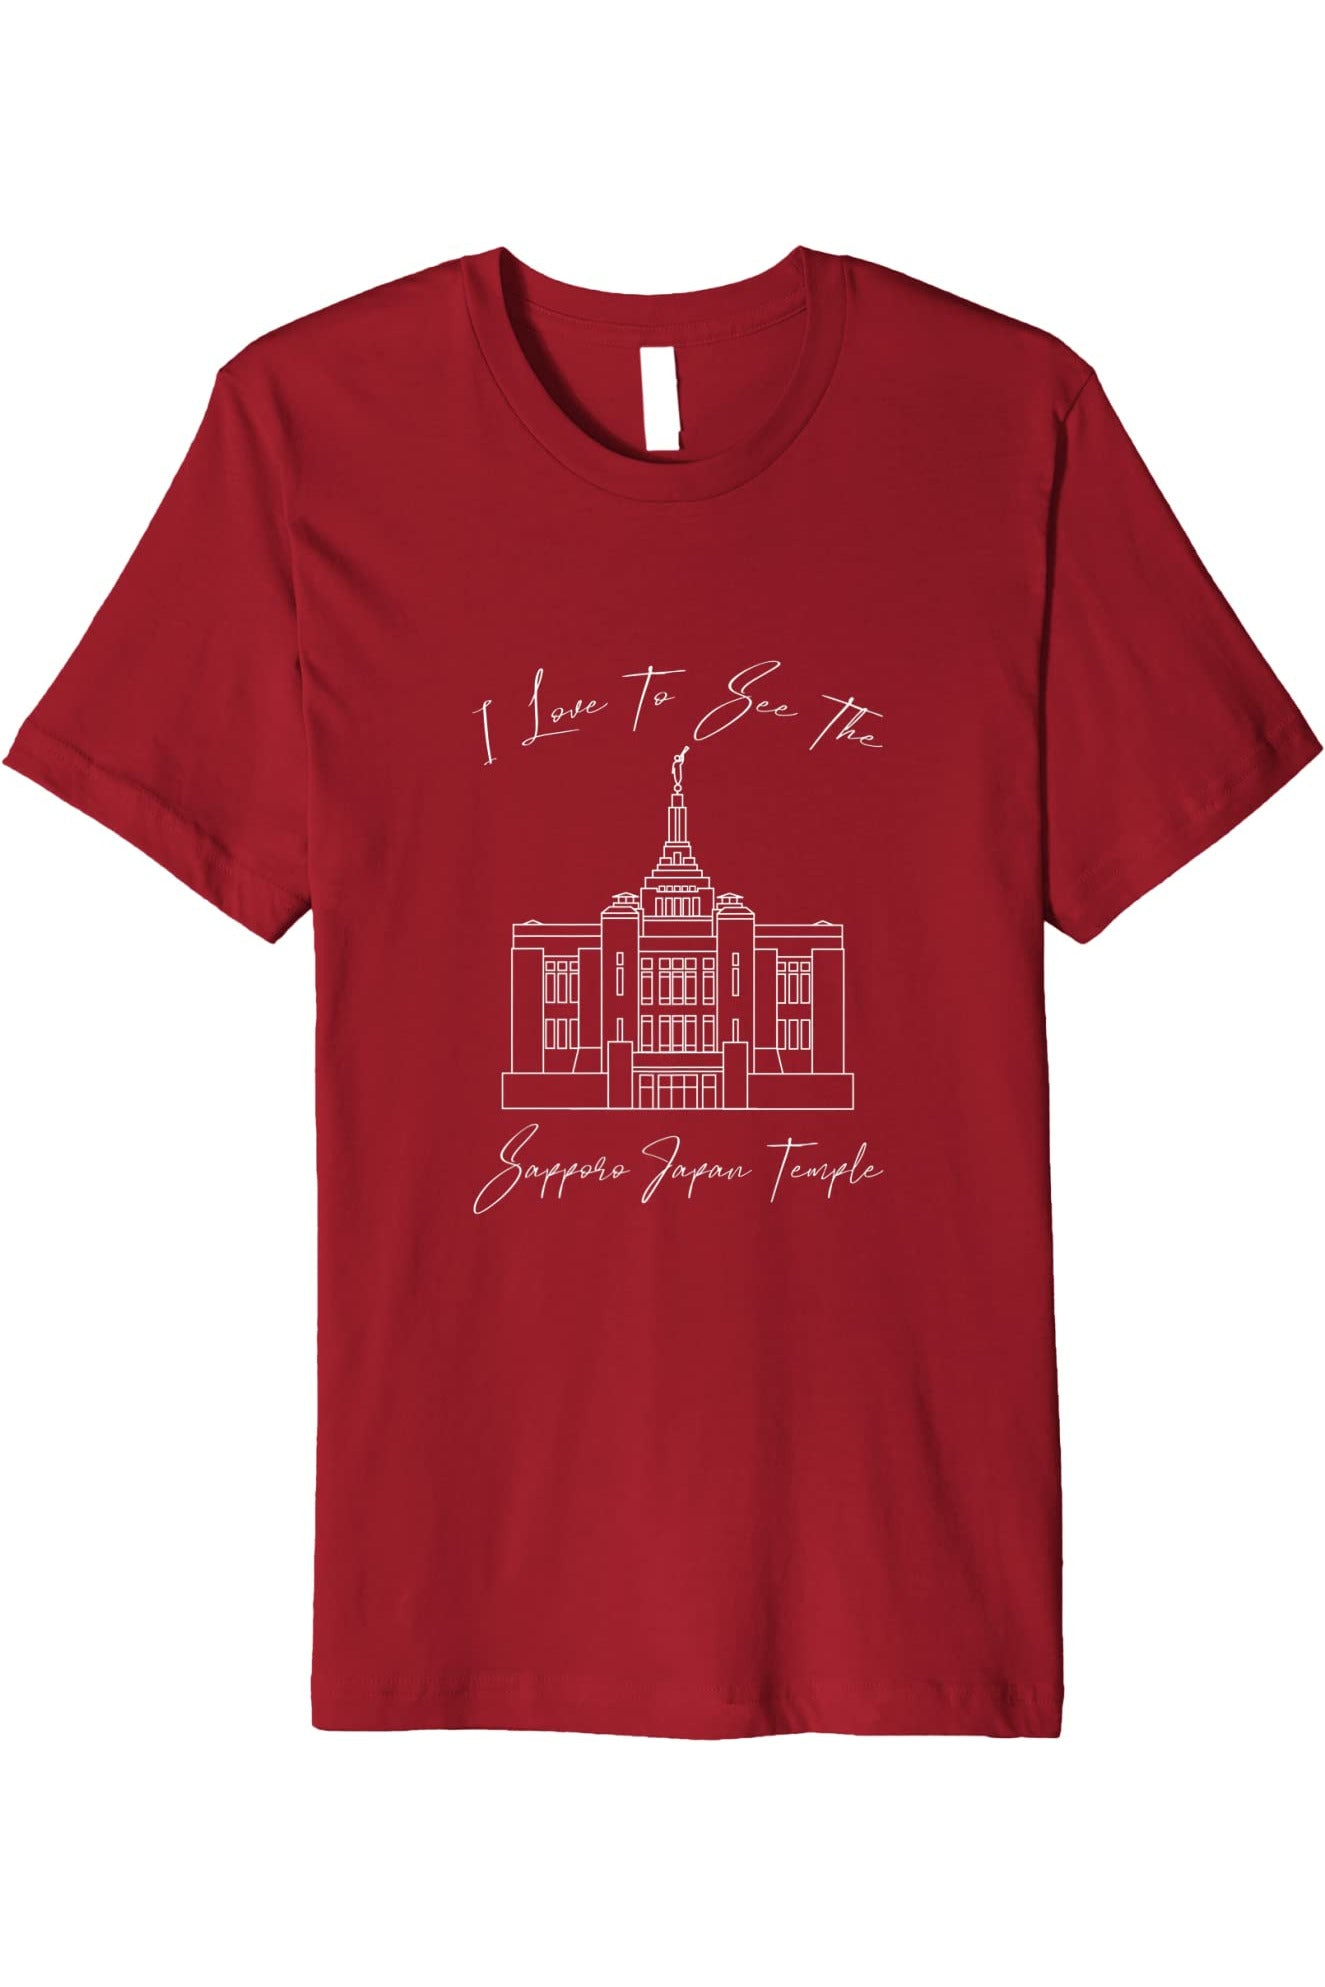 Sapporo Japan Temple T-Shirt - Premium - Calligraphy Style (English) US